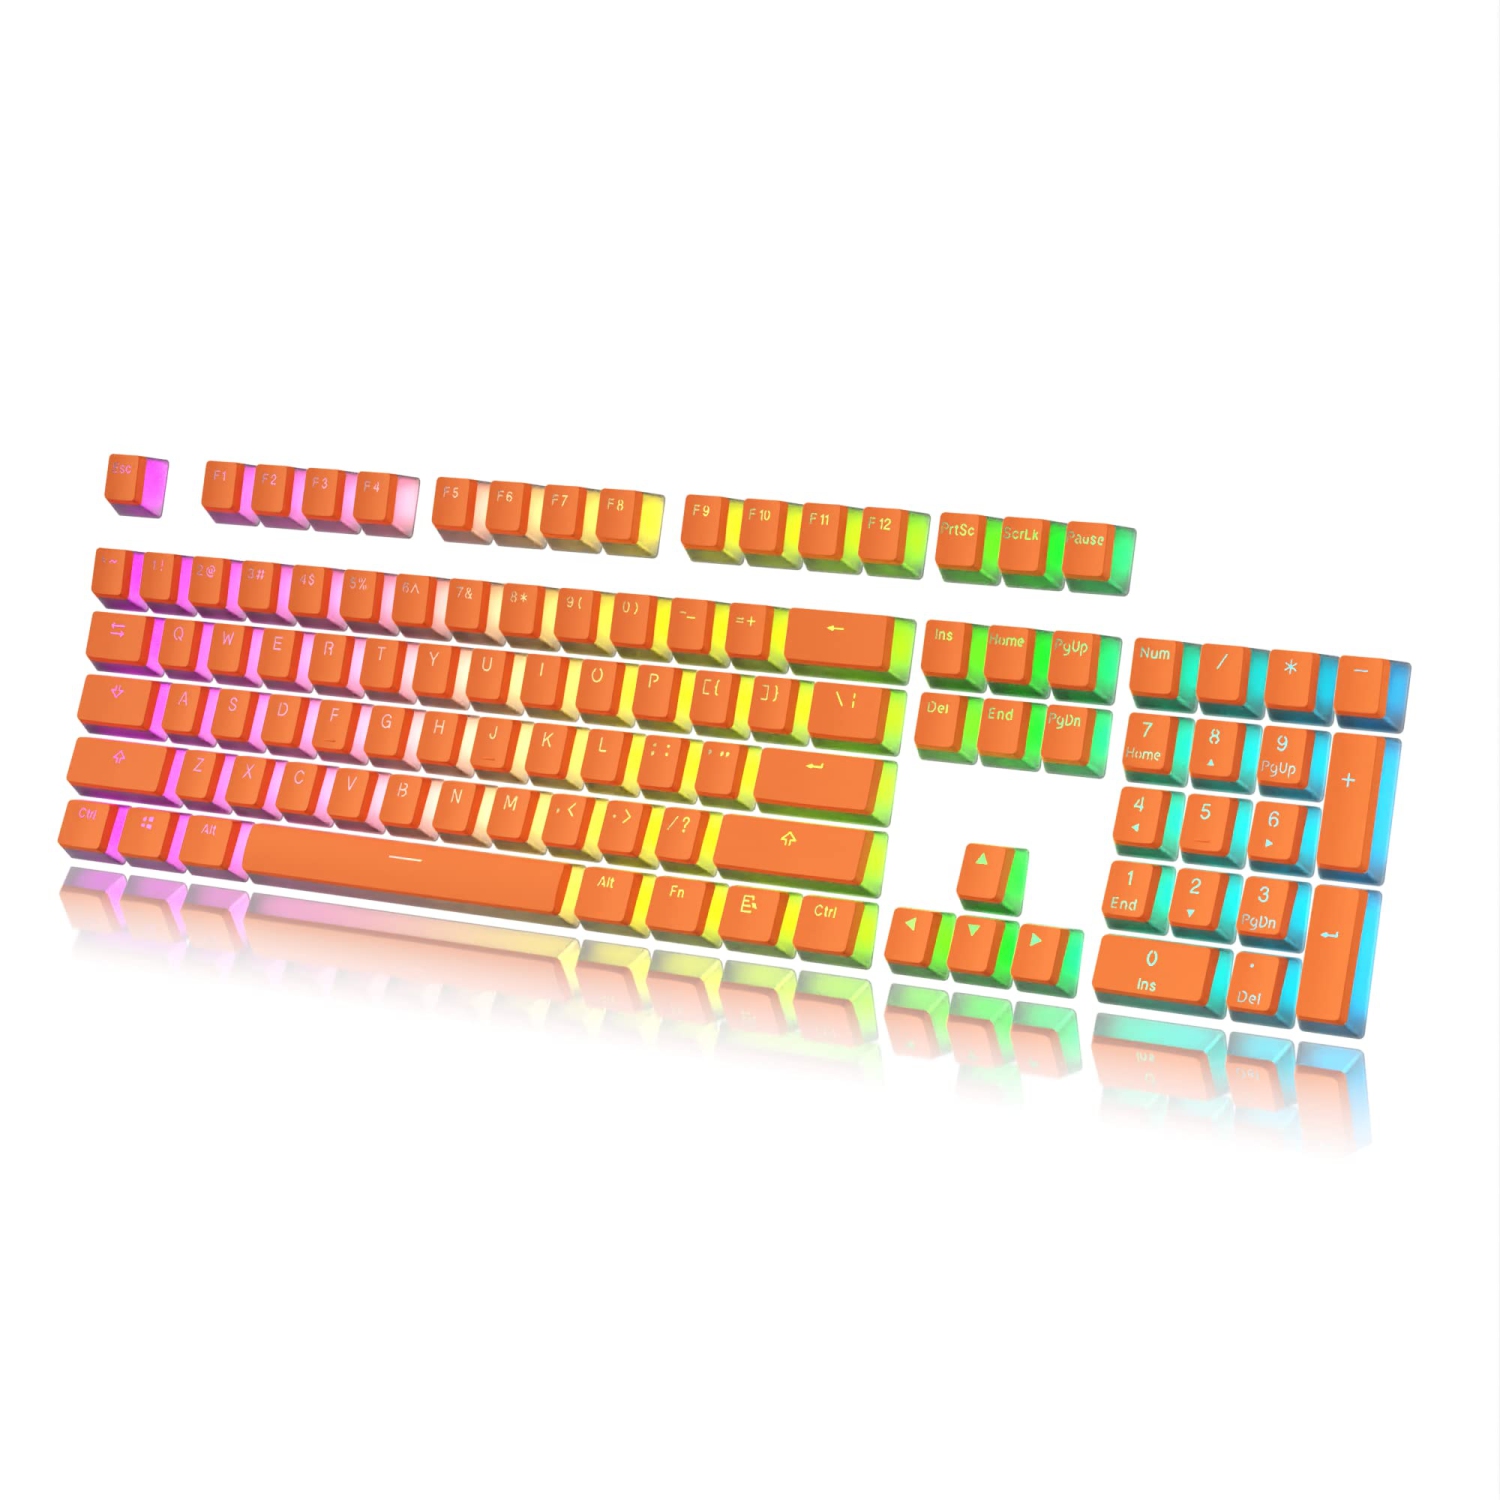 Pudding Keycaps Set | Doubleshot PBT Keycap Set | Full 108 OEM Profile Key Set | ANSI US-Layout | for Mechanical Keyboard | Compatible with Cherry MX, Gateron, Kailh, Outemu